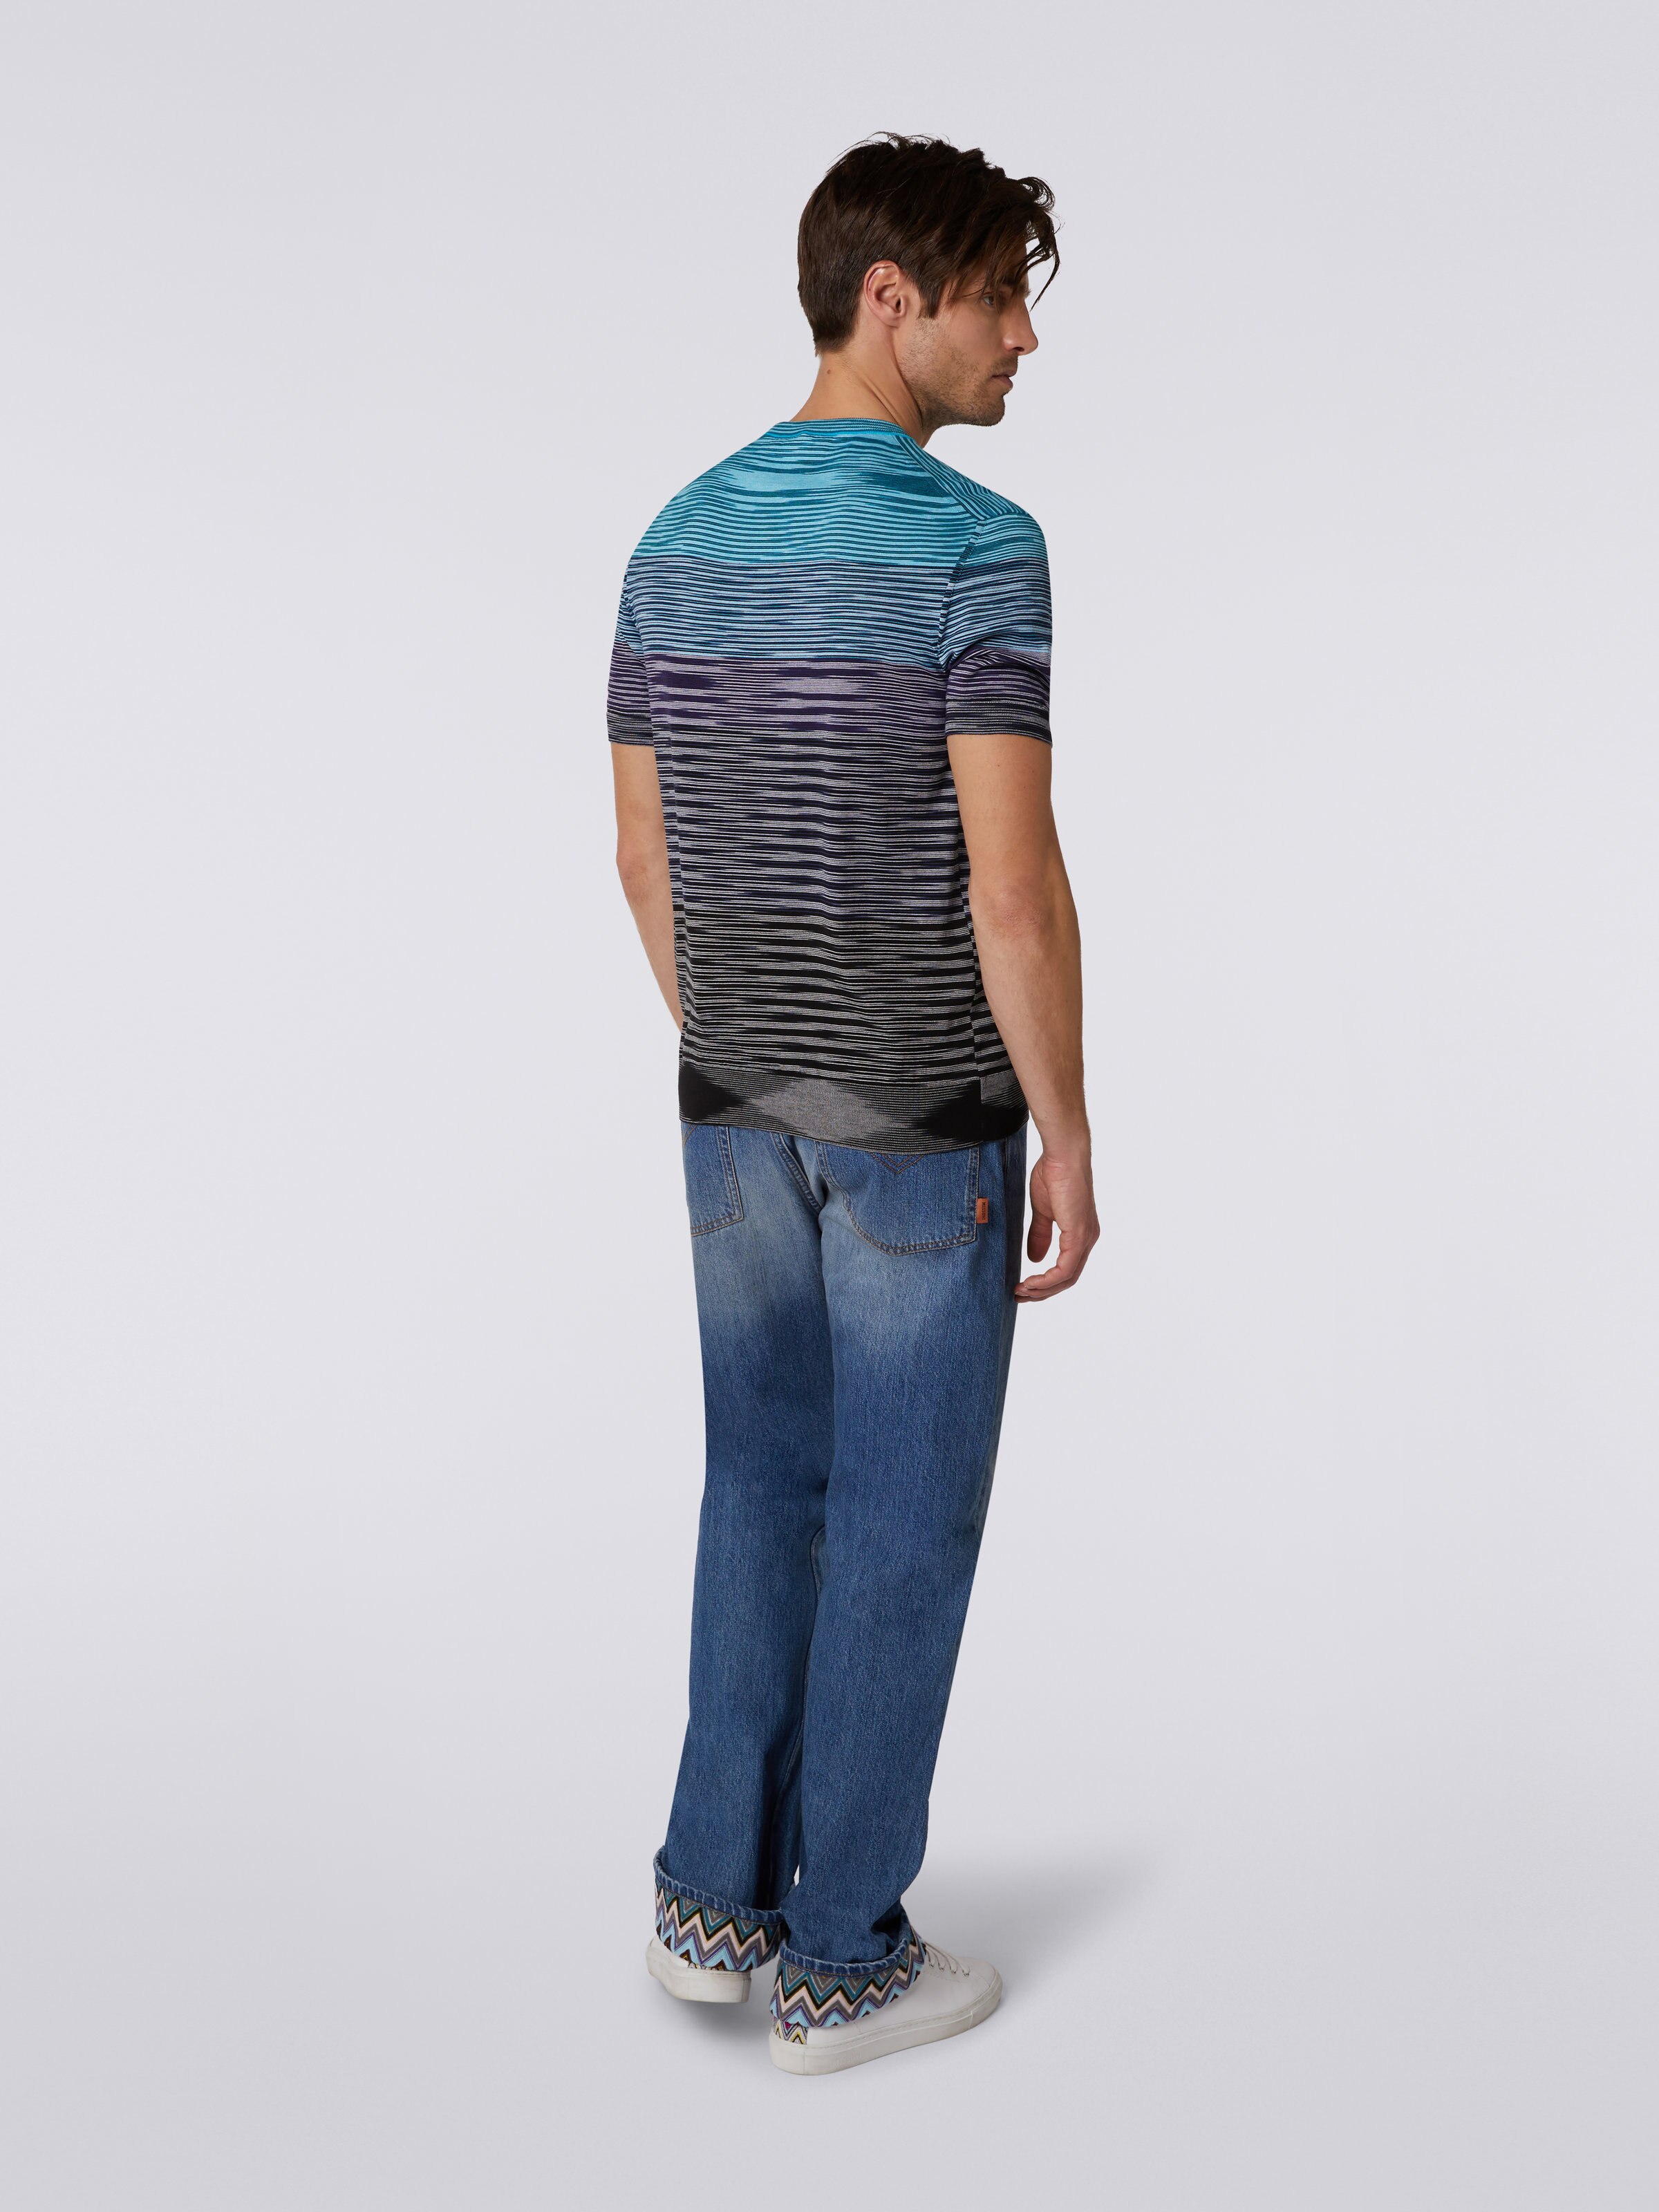 Camiseta de cuello redondo y manga corta en punto de algodón a rayas degradadas, Azul Oscuro, Morado & Negro - 3